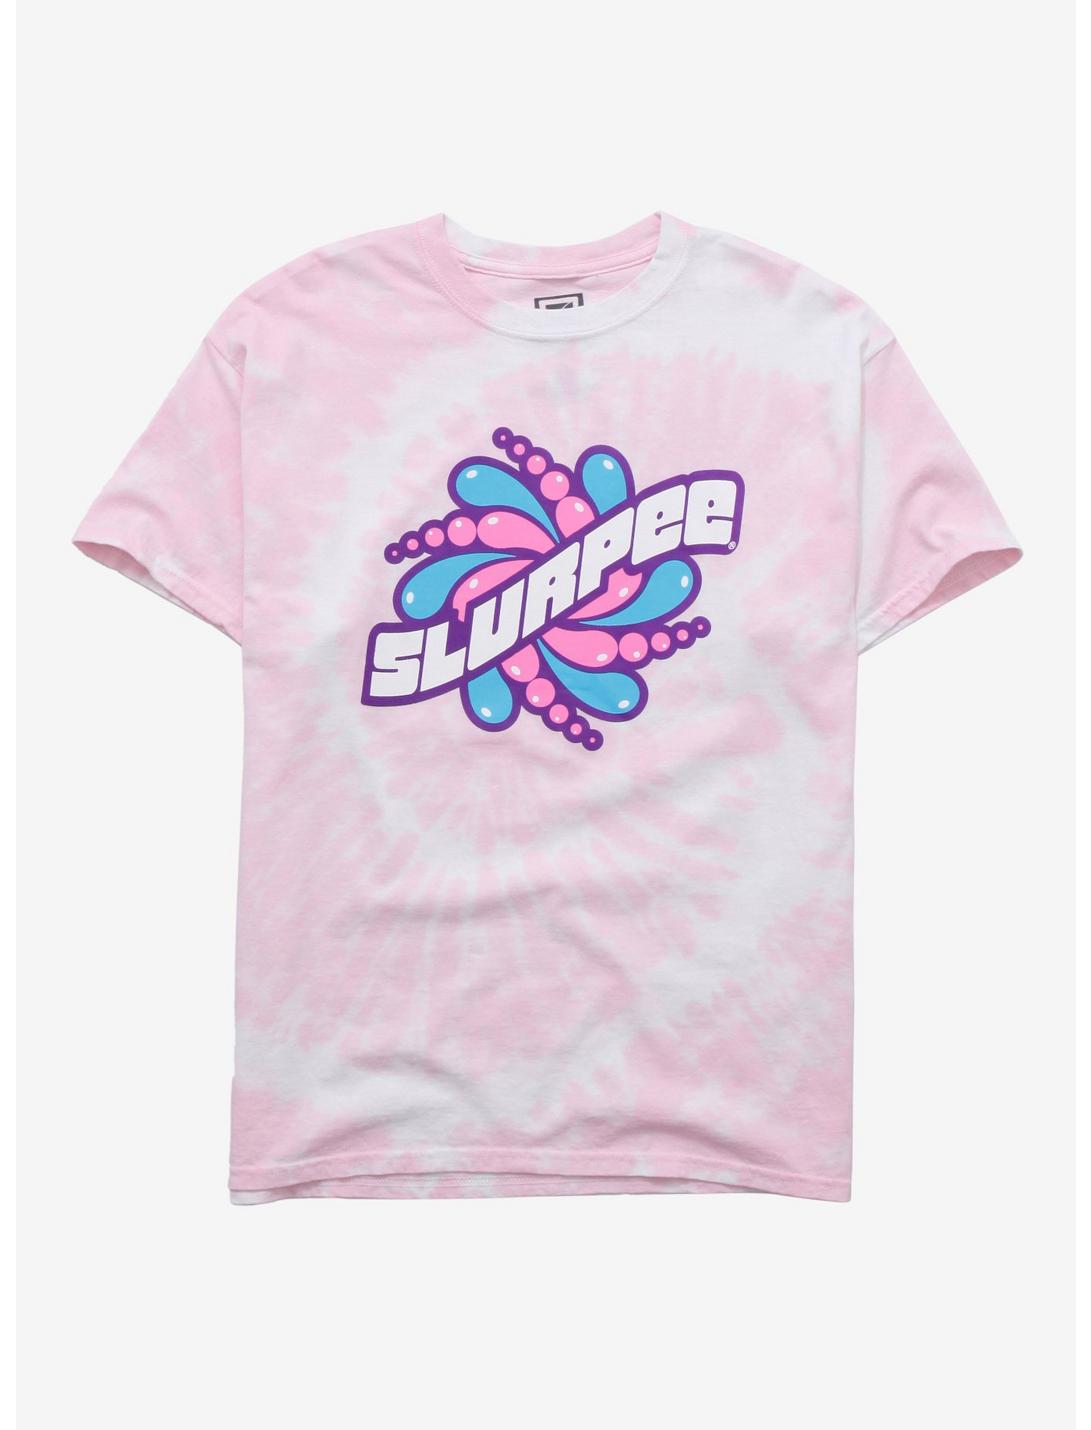 7-Eleven Slurpee Tie-Dye Boyfriend Fit Girls T-Shirt, MULTI, hi-res